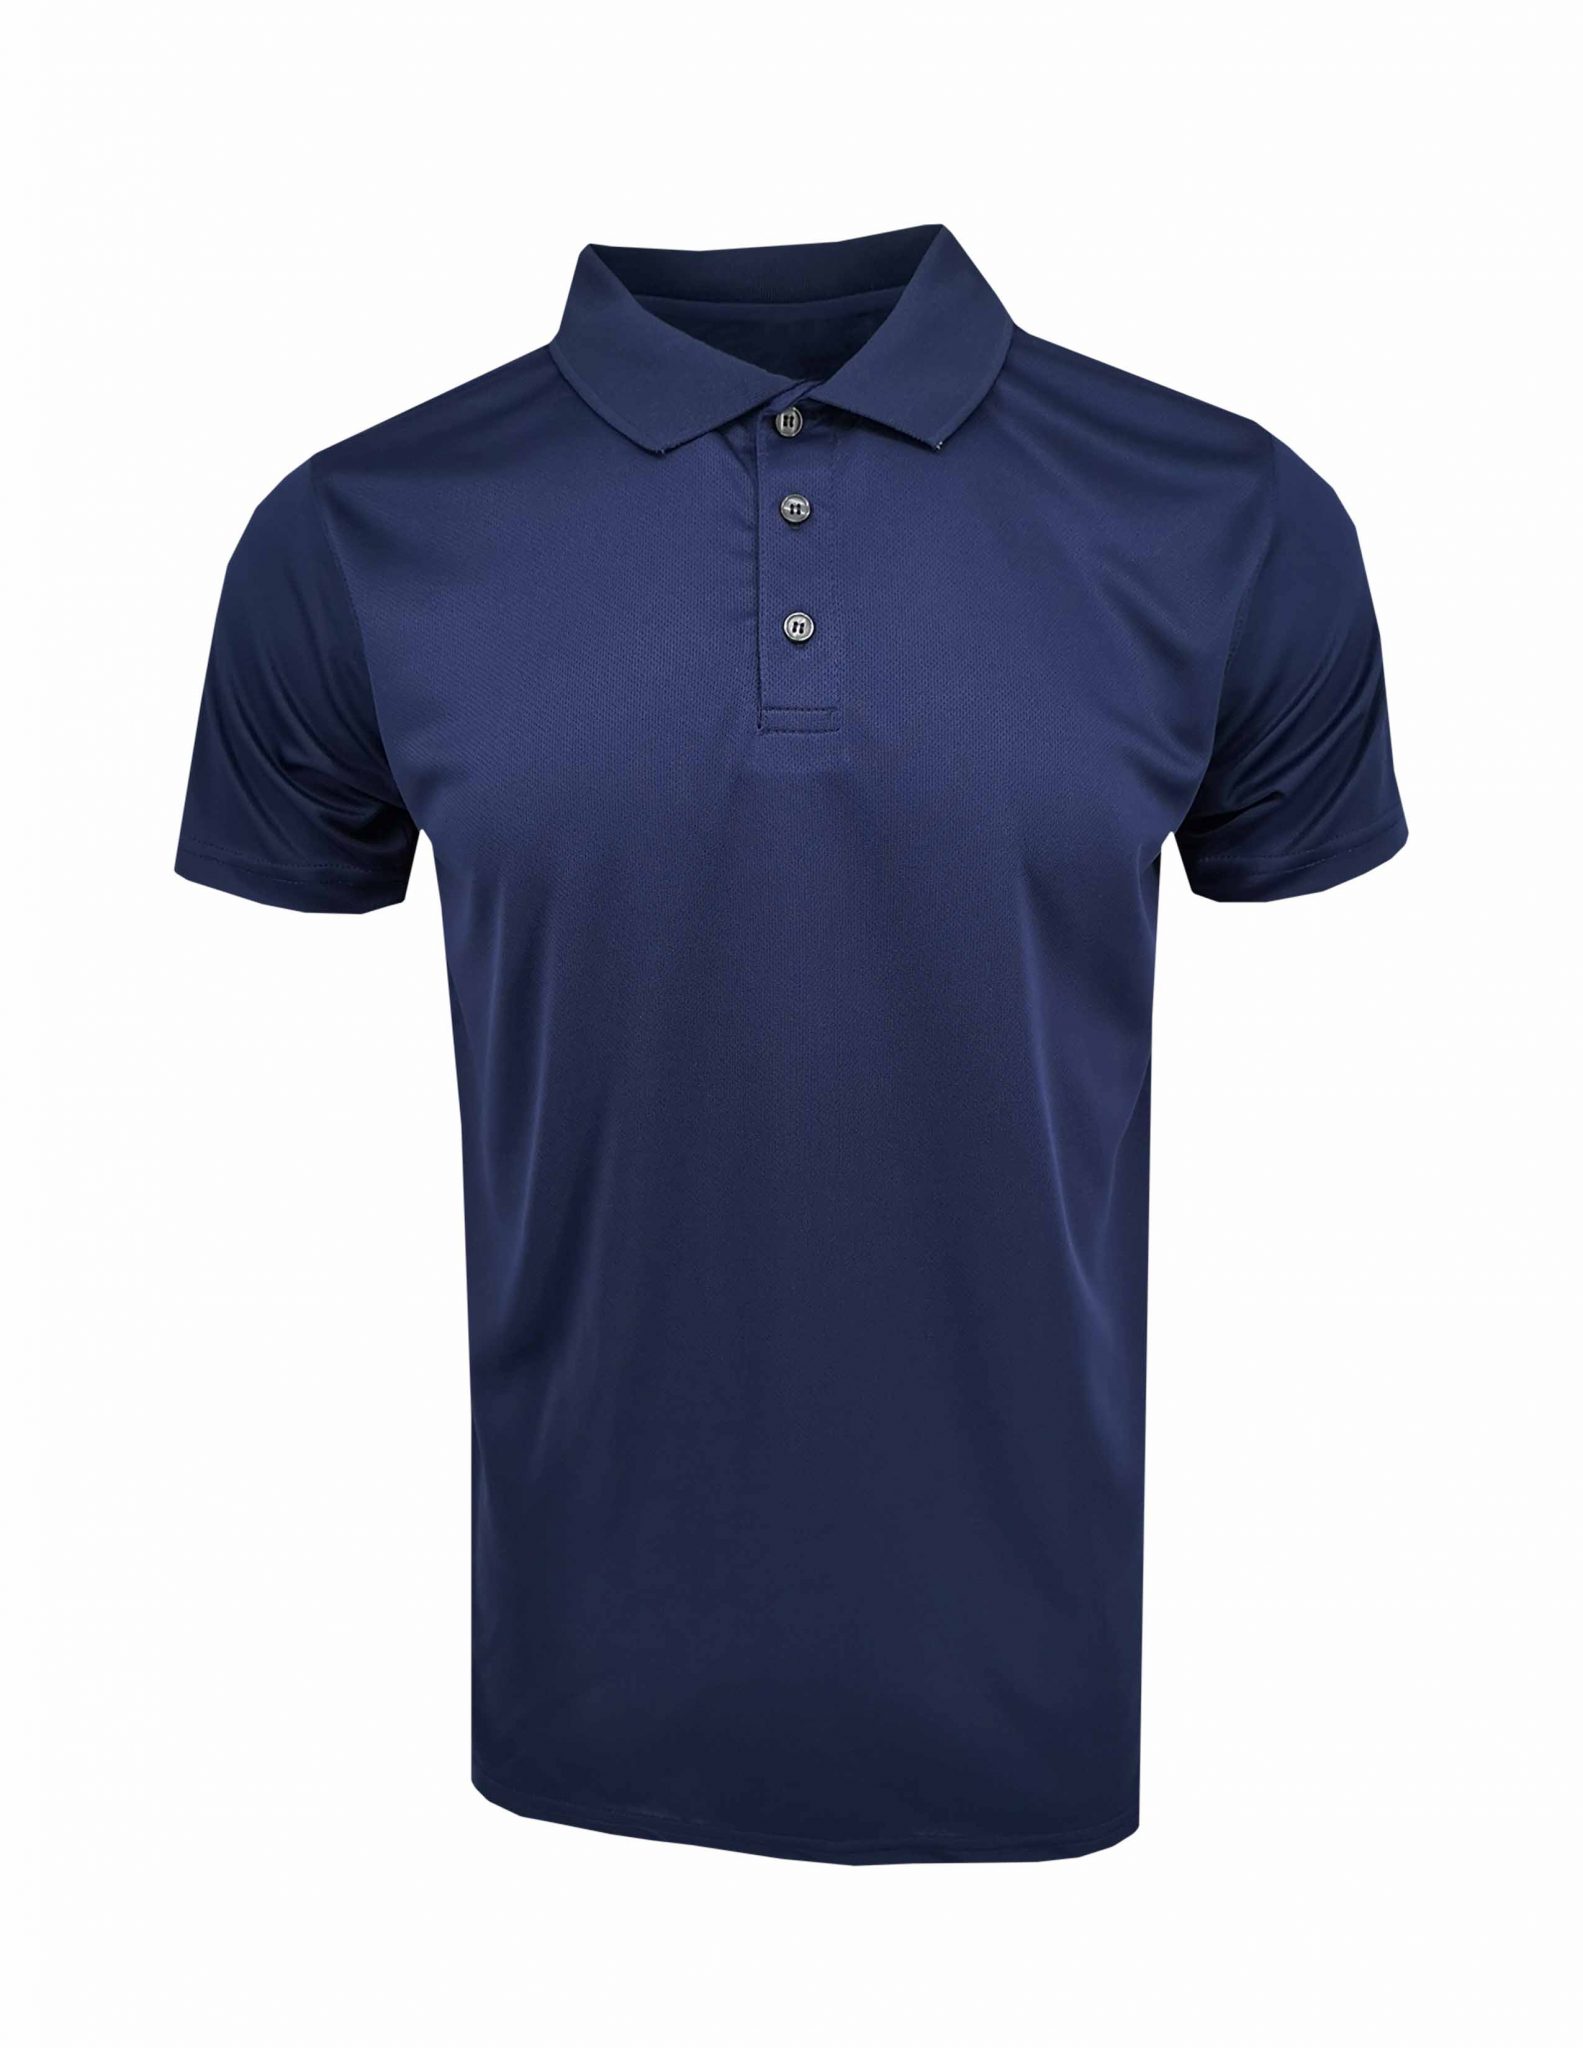 QDP 5309 Navy Blue | Rightway T-Shirt | Basic T-Shirt Supplier Malaysia ...